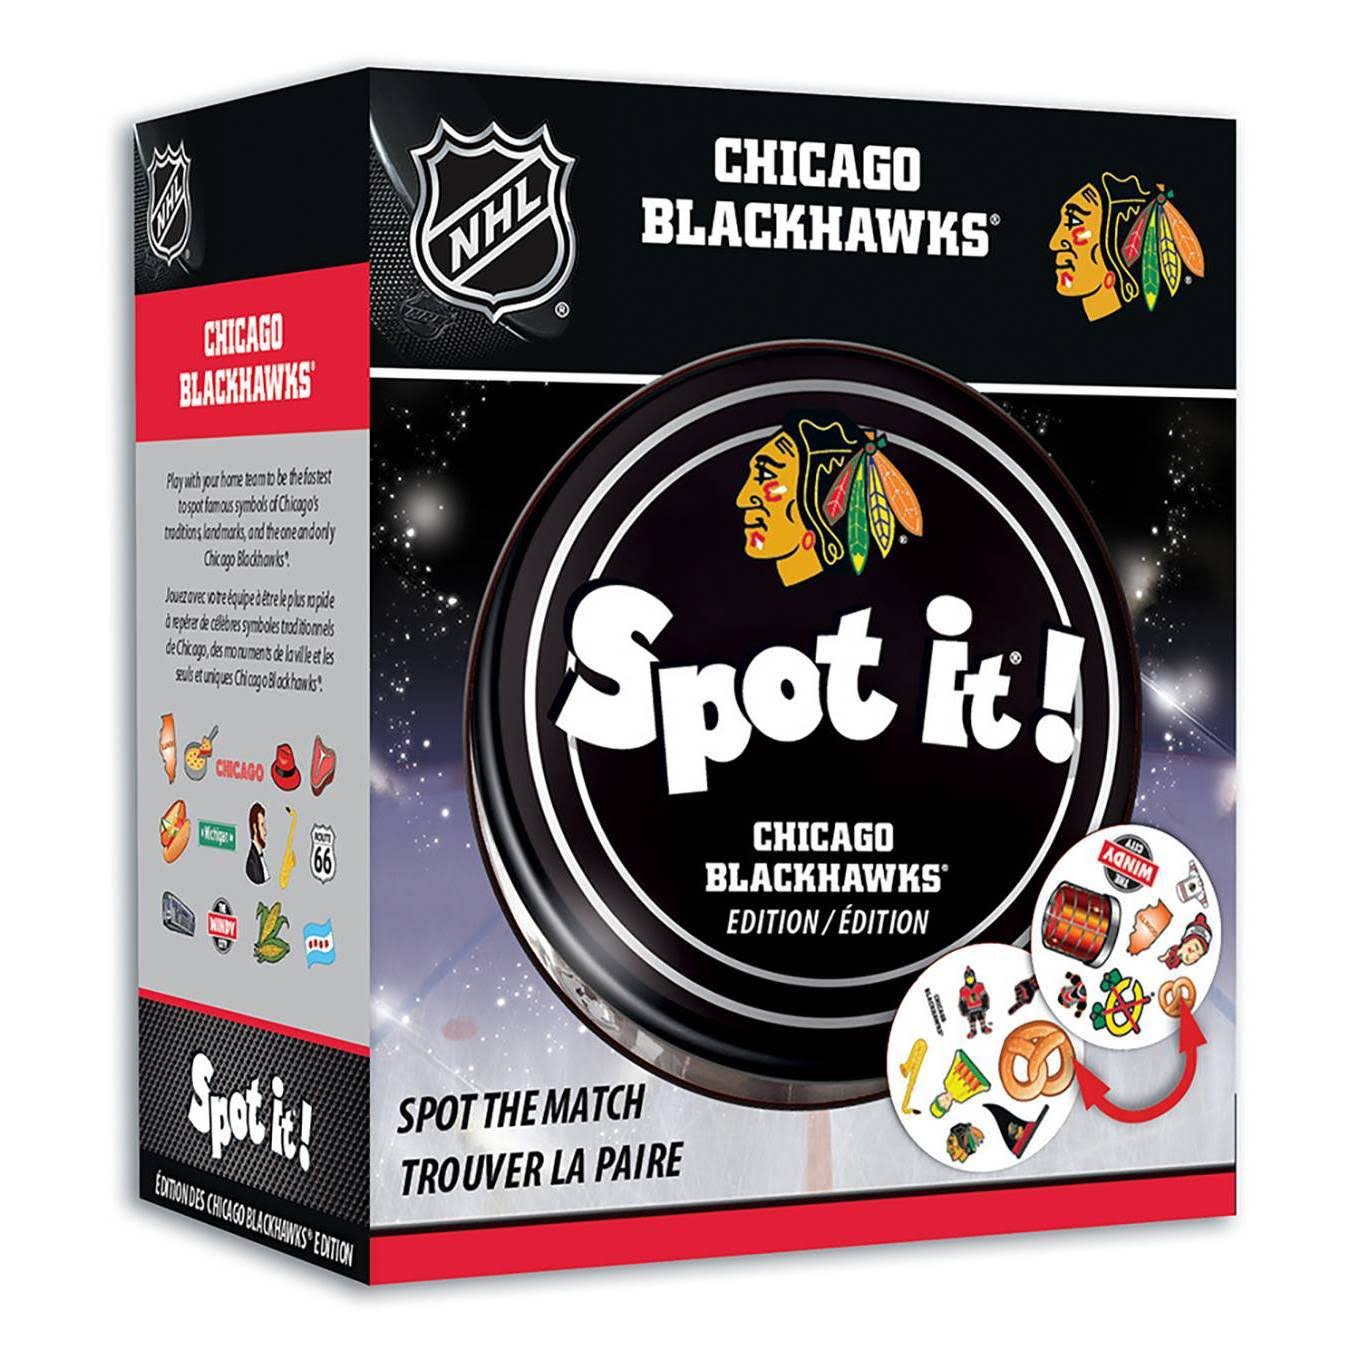 (Chicago Blackhawks) - Chicago Blackhawks Spot It!